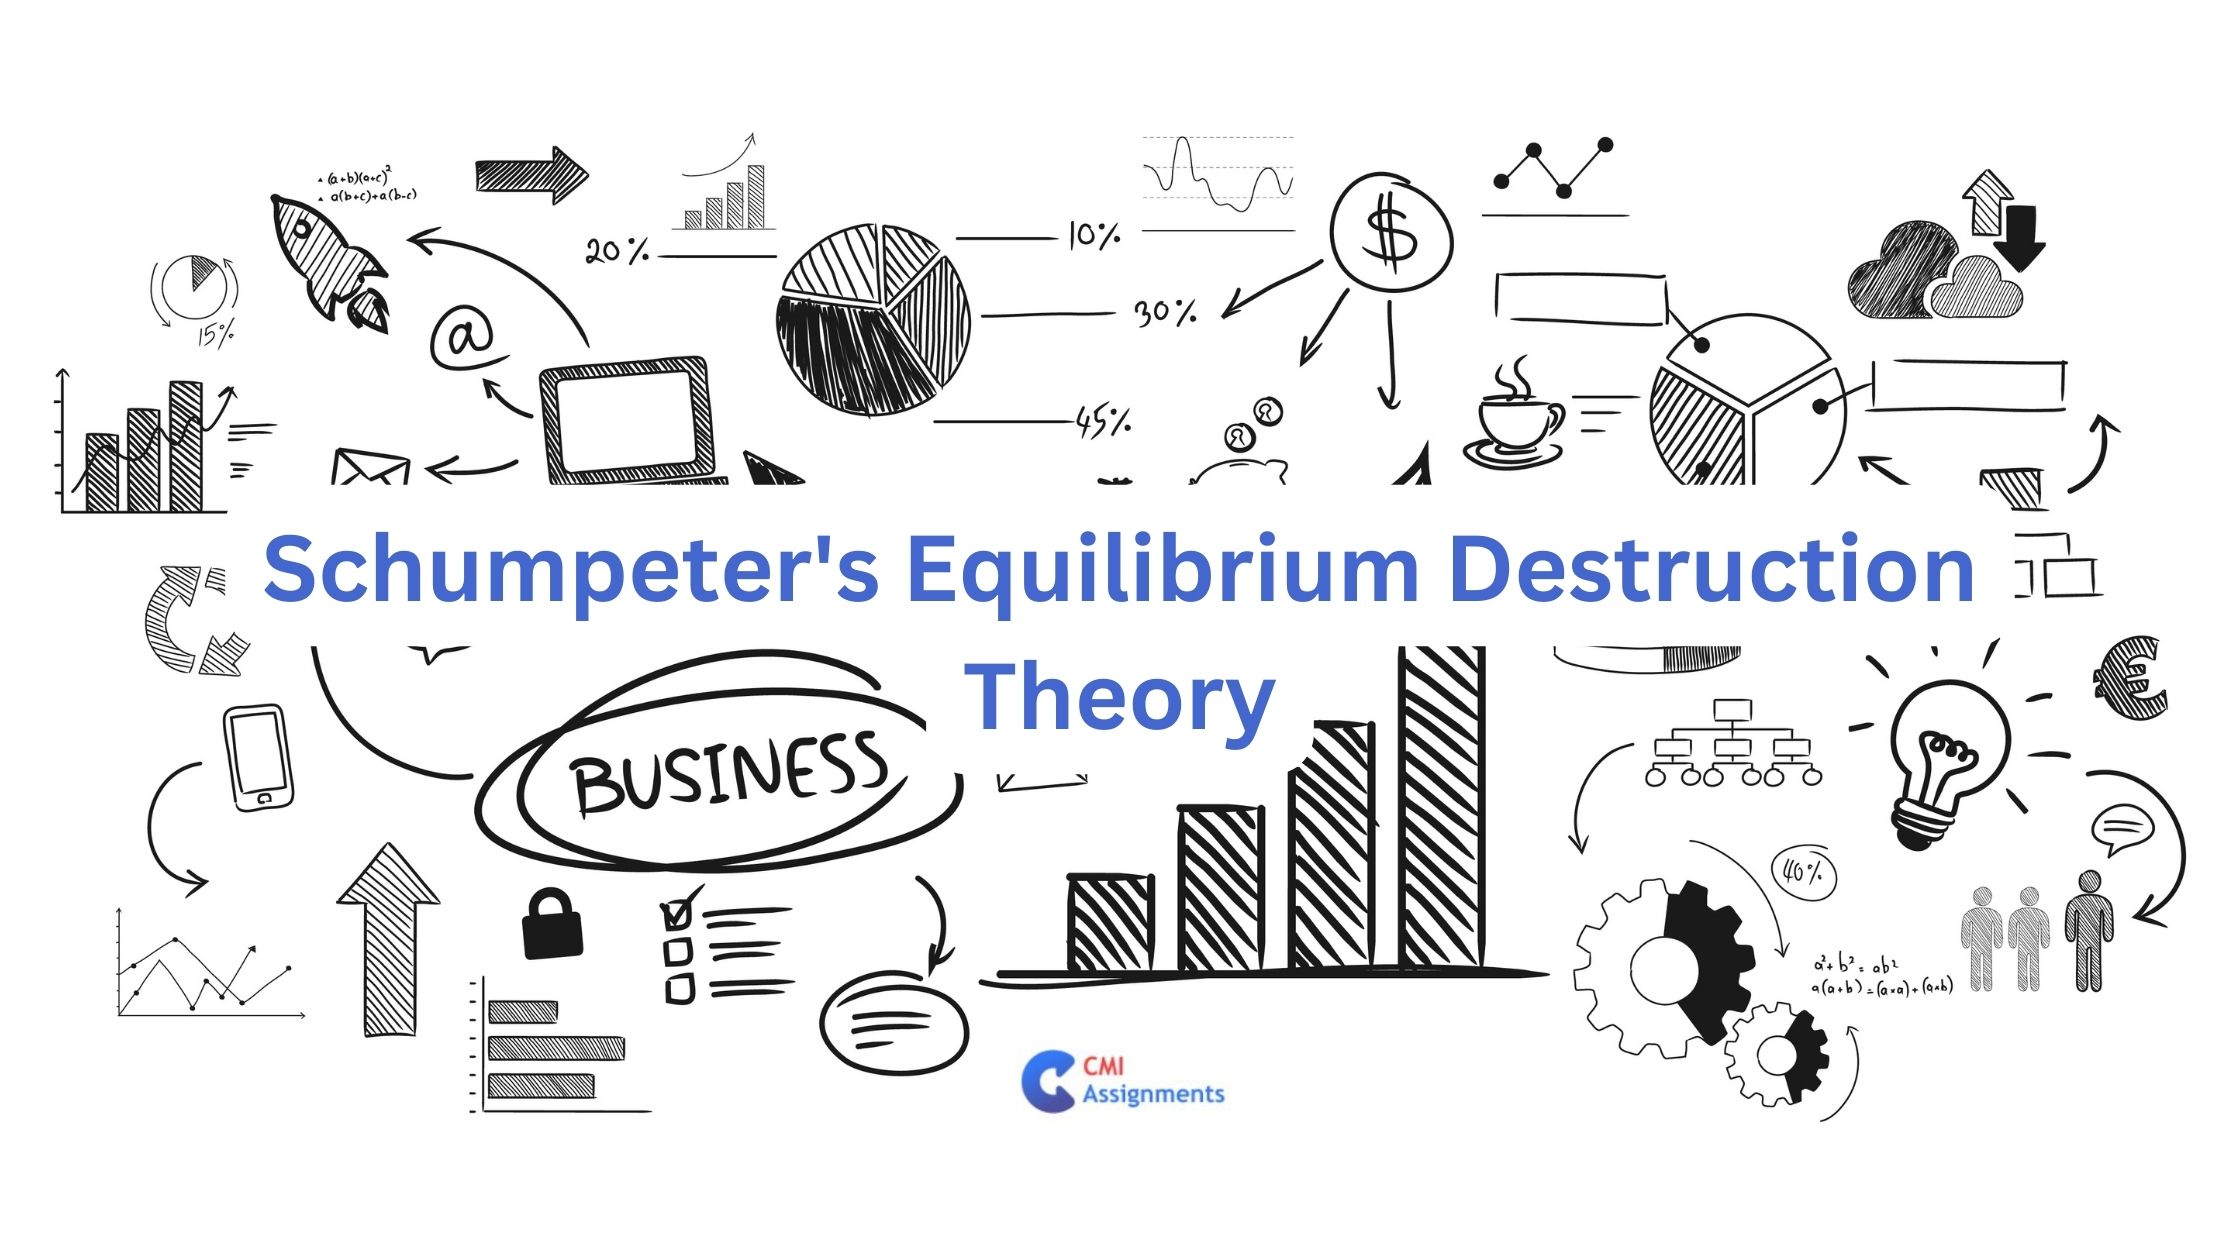 Schumpeter's equilibrium destruction theory